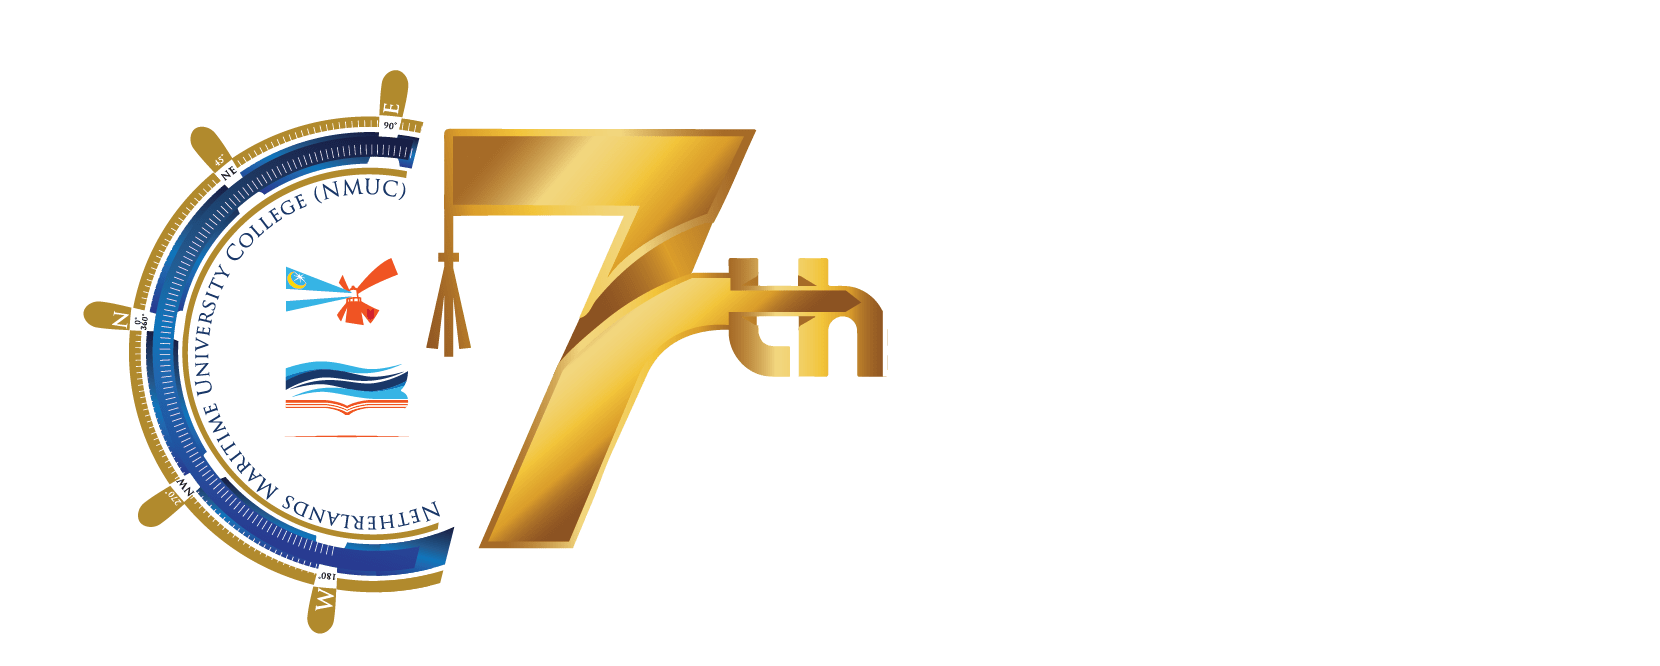 7th convocation logo